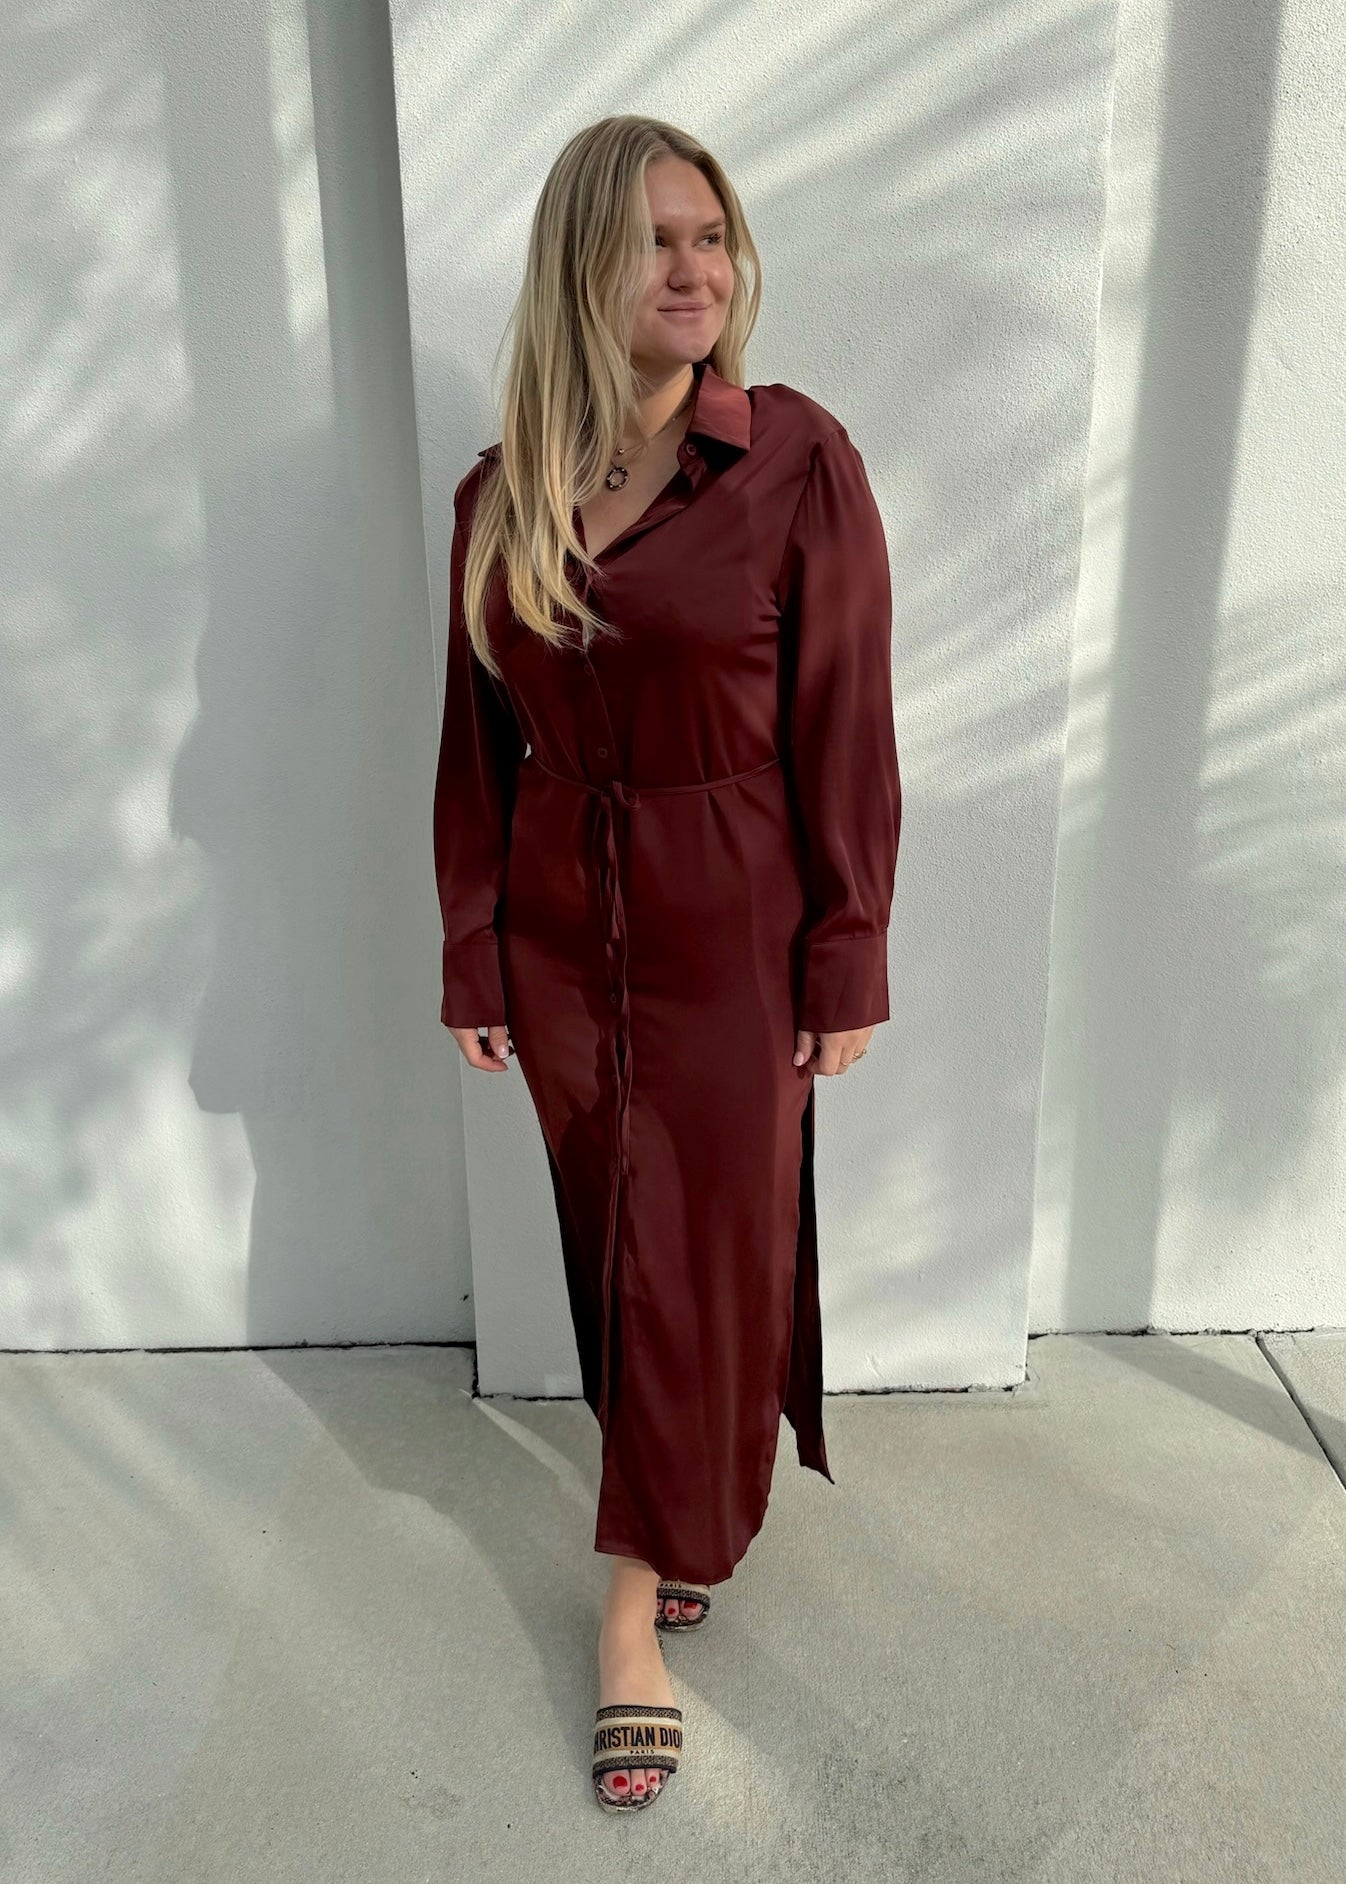 Red Wine Sangria: Merlot Long Sleeve Tie Front Maxi Dress